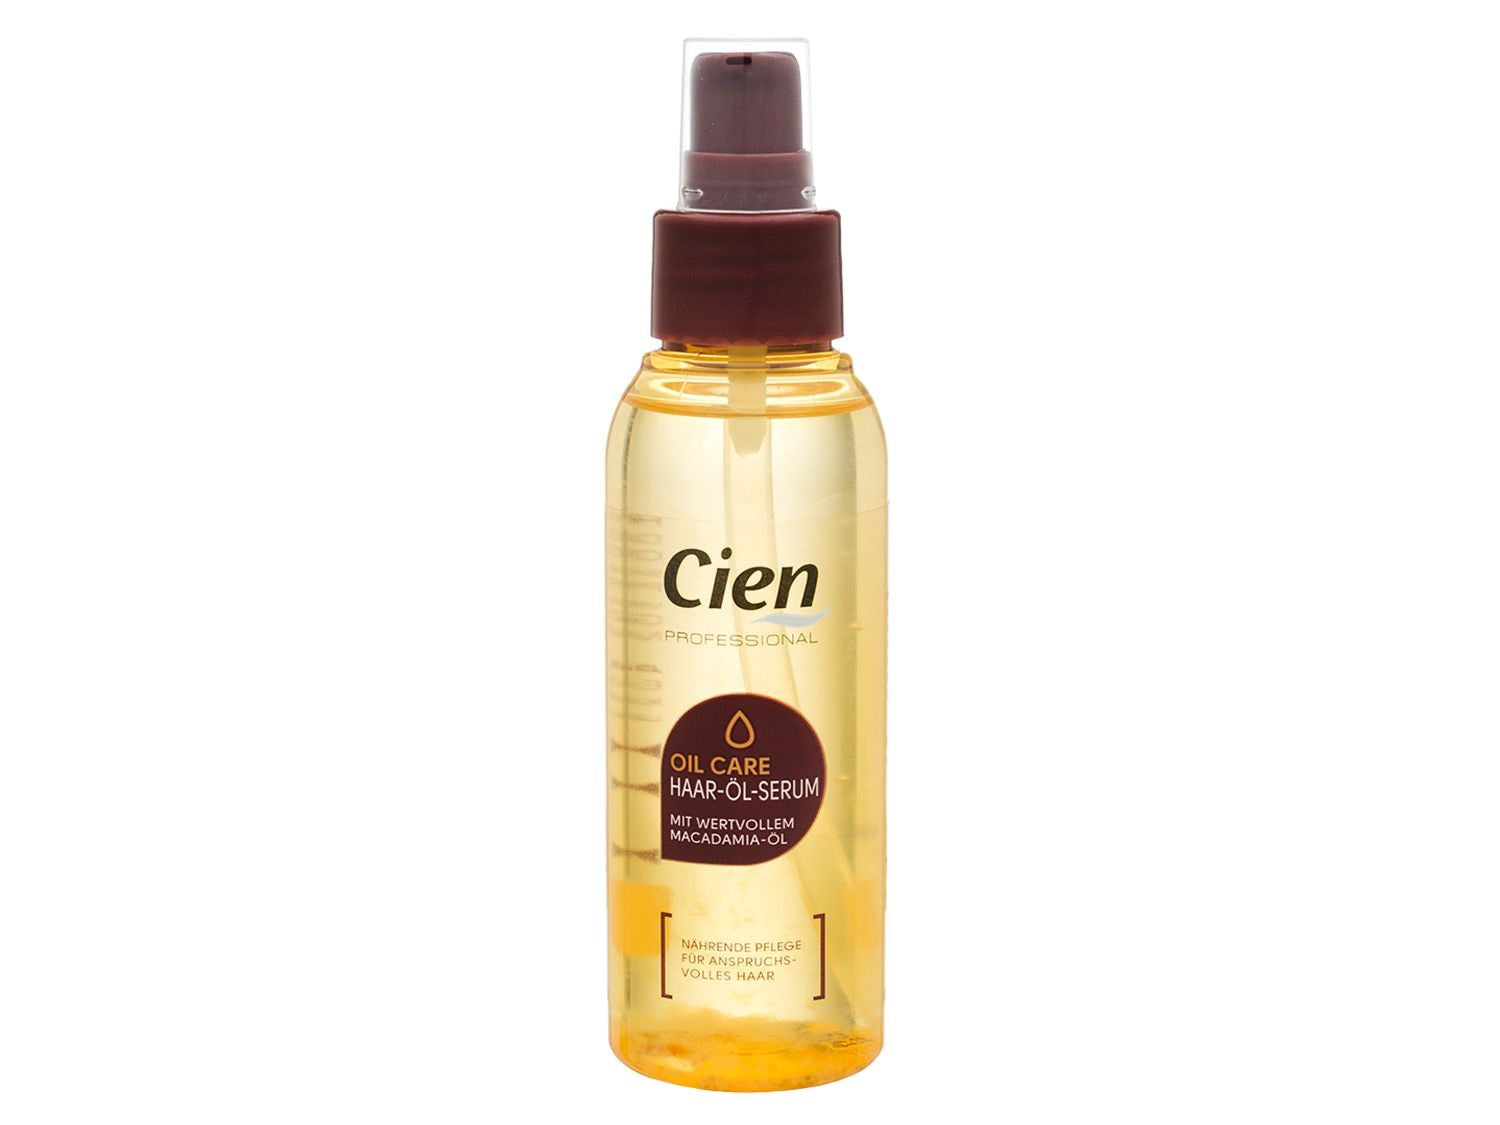 Cien hair oil serum - buy European skincare in Hong Kong - 1click2beauty